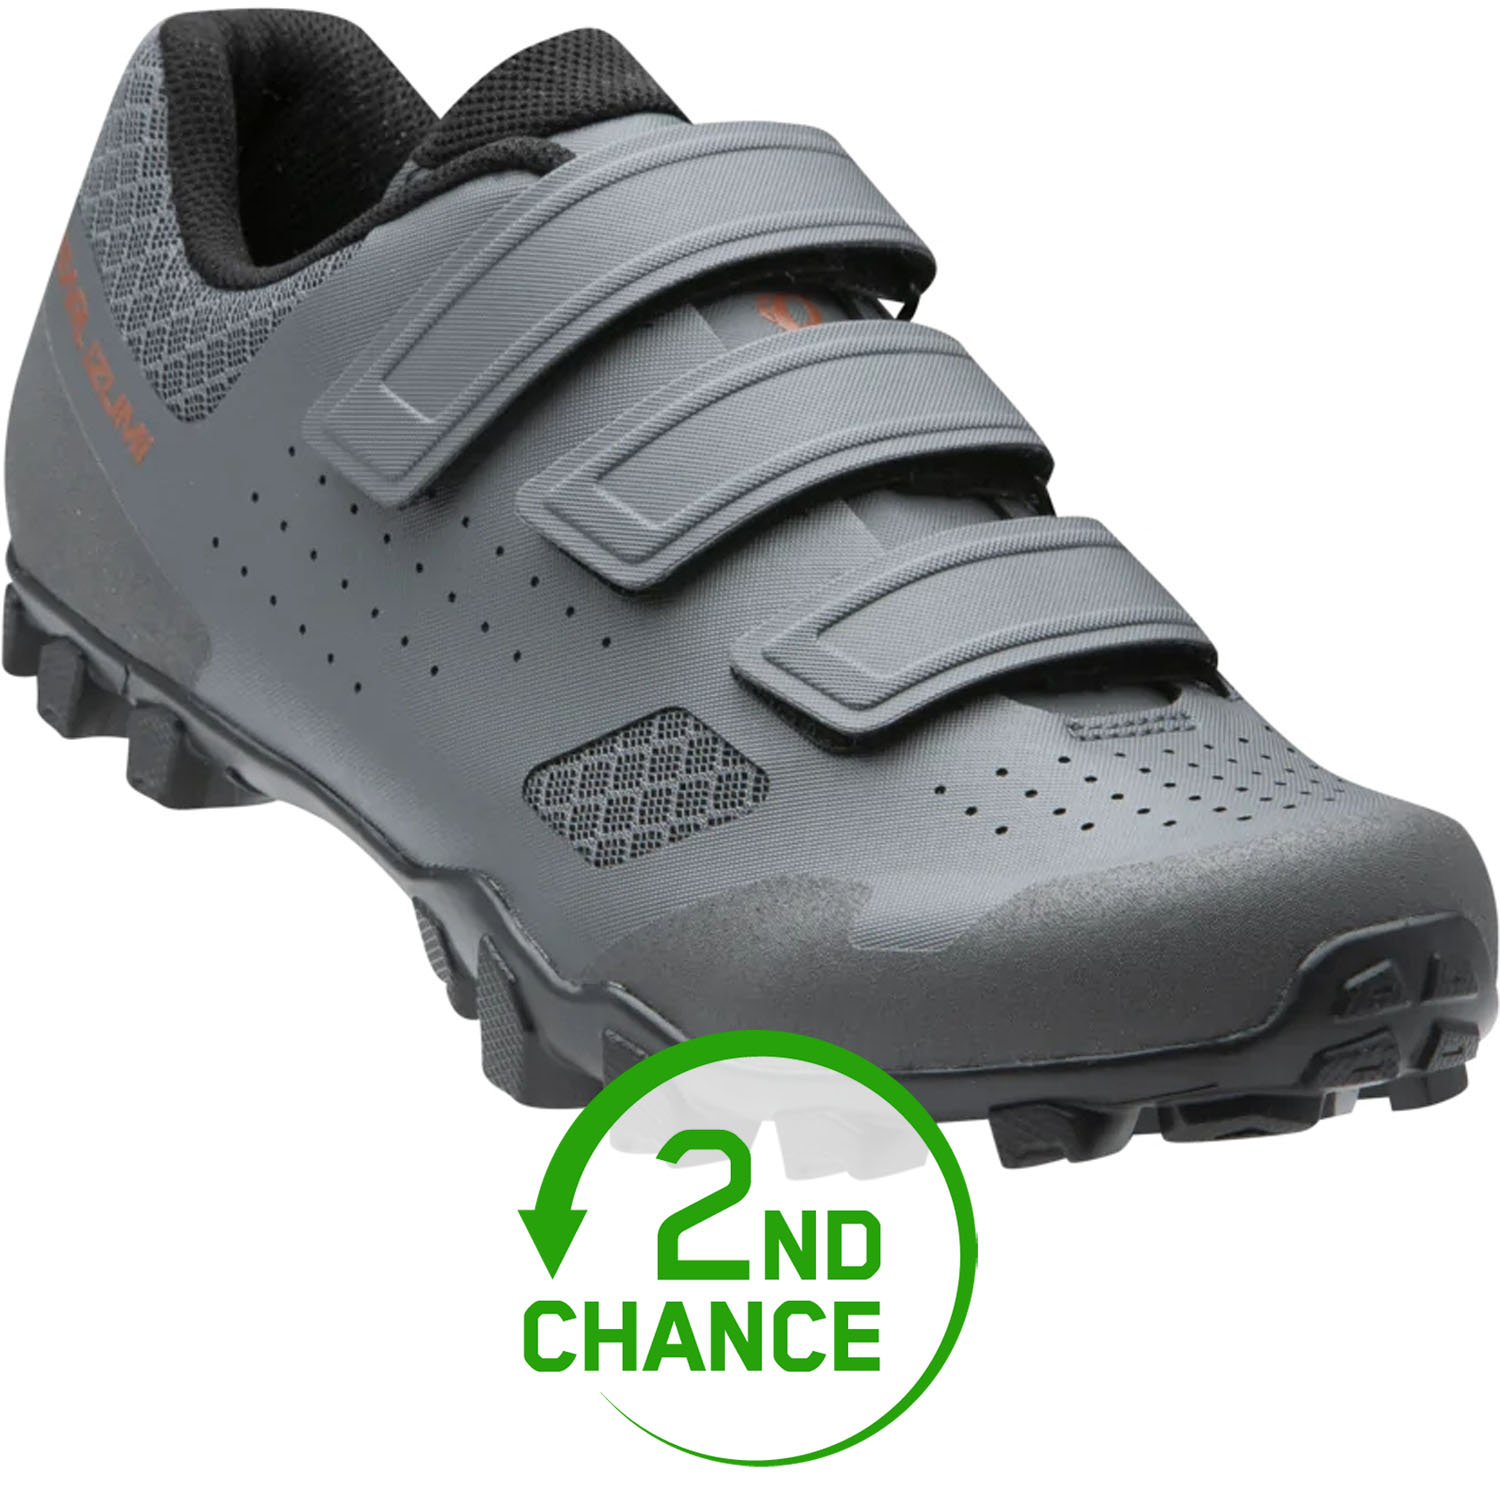 Produktbild von PEARL iZUMi Summit MTB Schuhe Herren 15192303 - smoke grey/phantom - 9XC - B-Ware